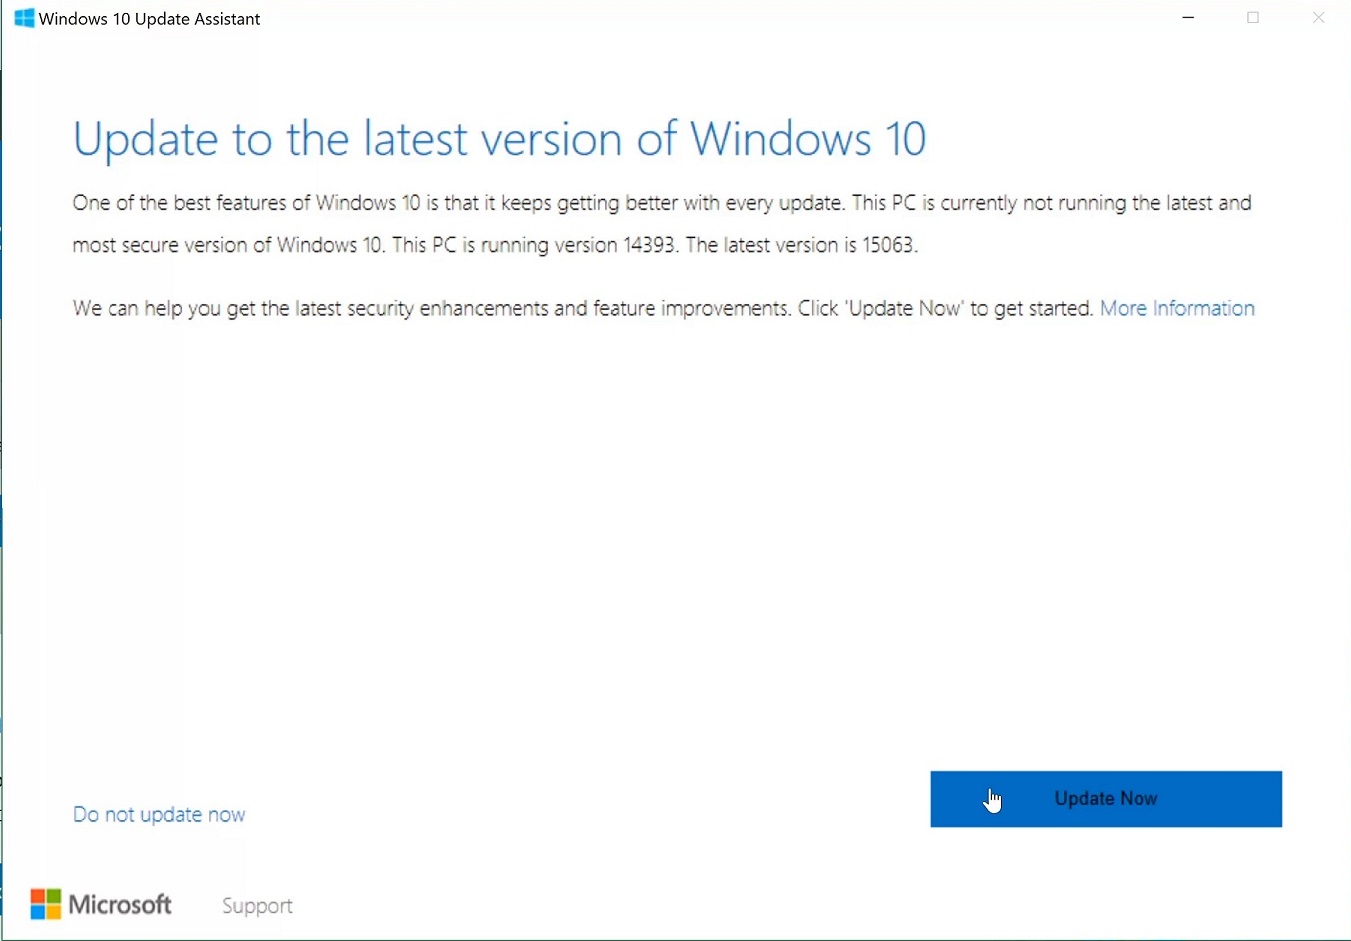 Windows 10 Creators Update Upgrade assistant tool